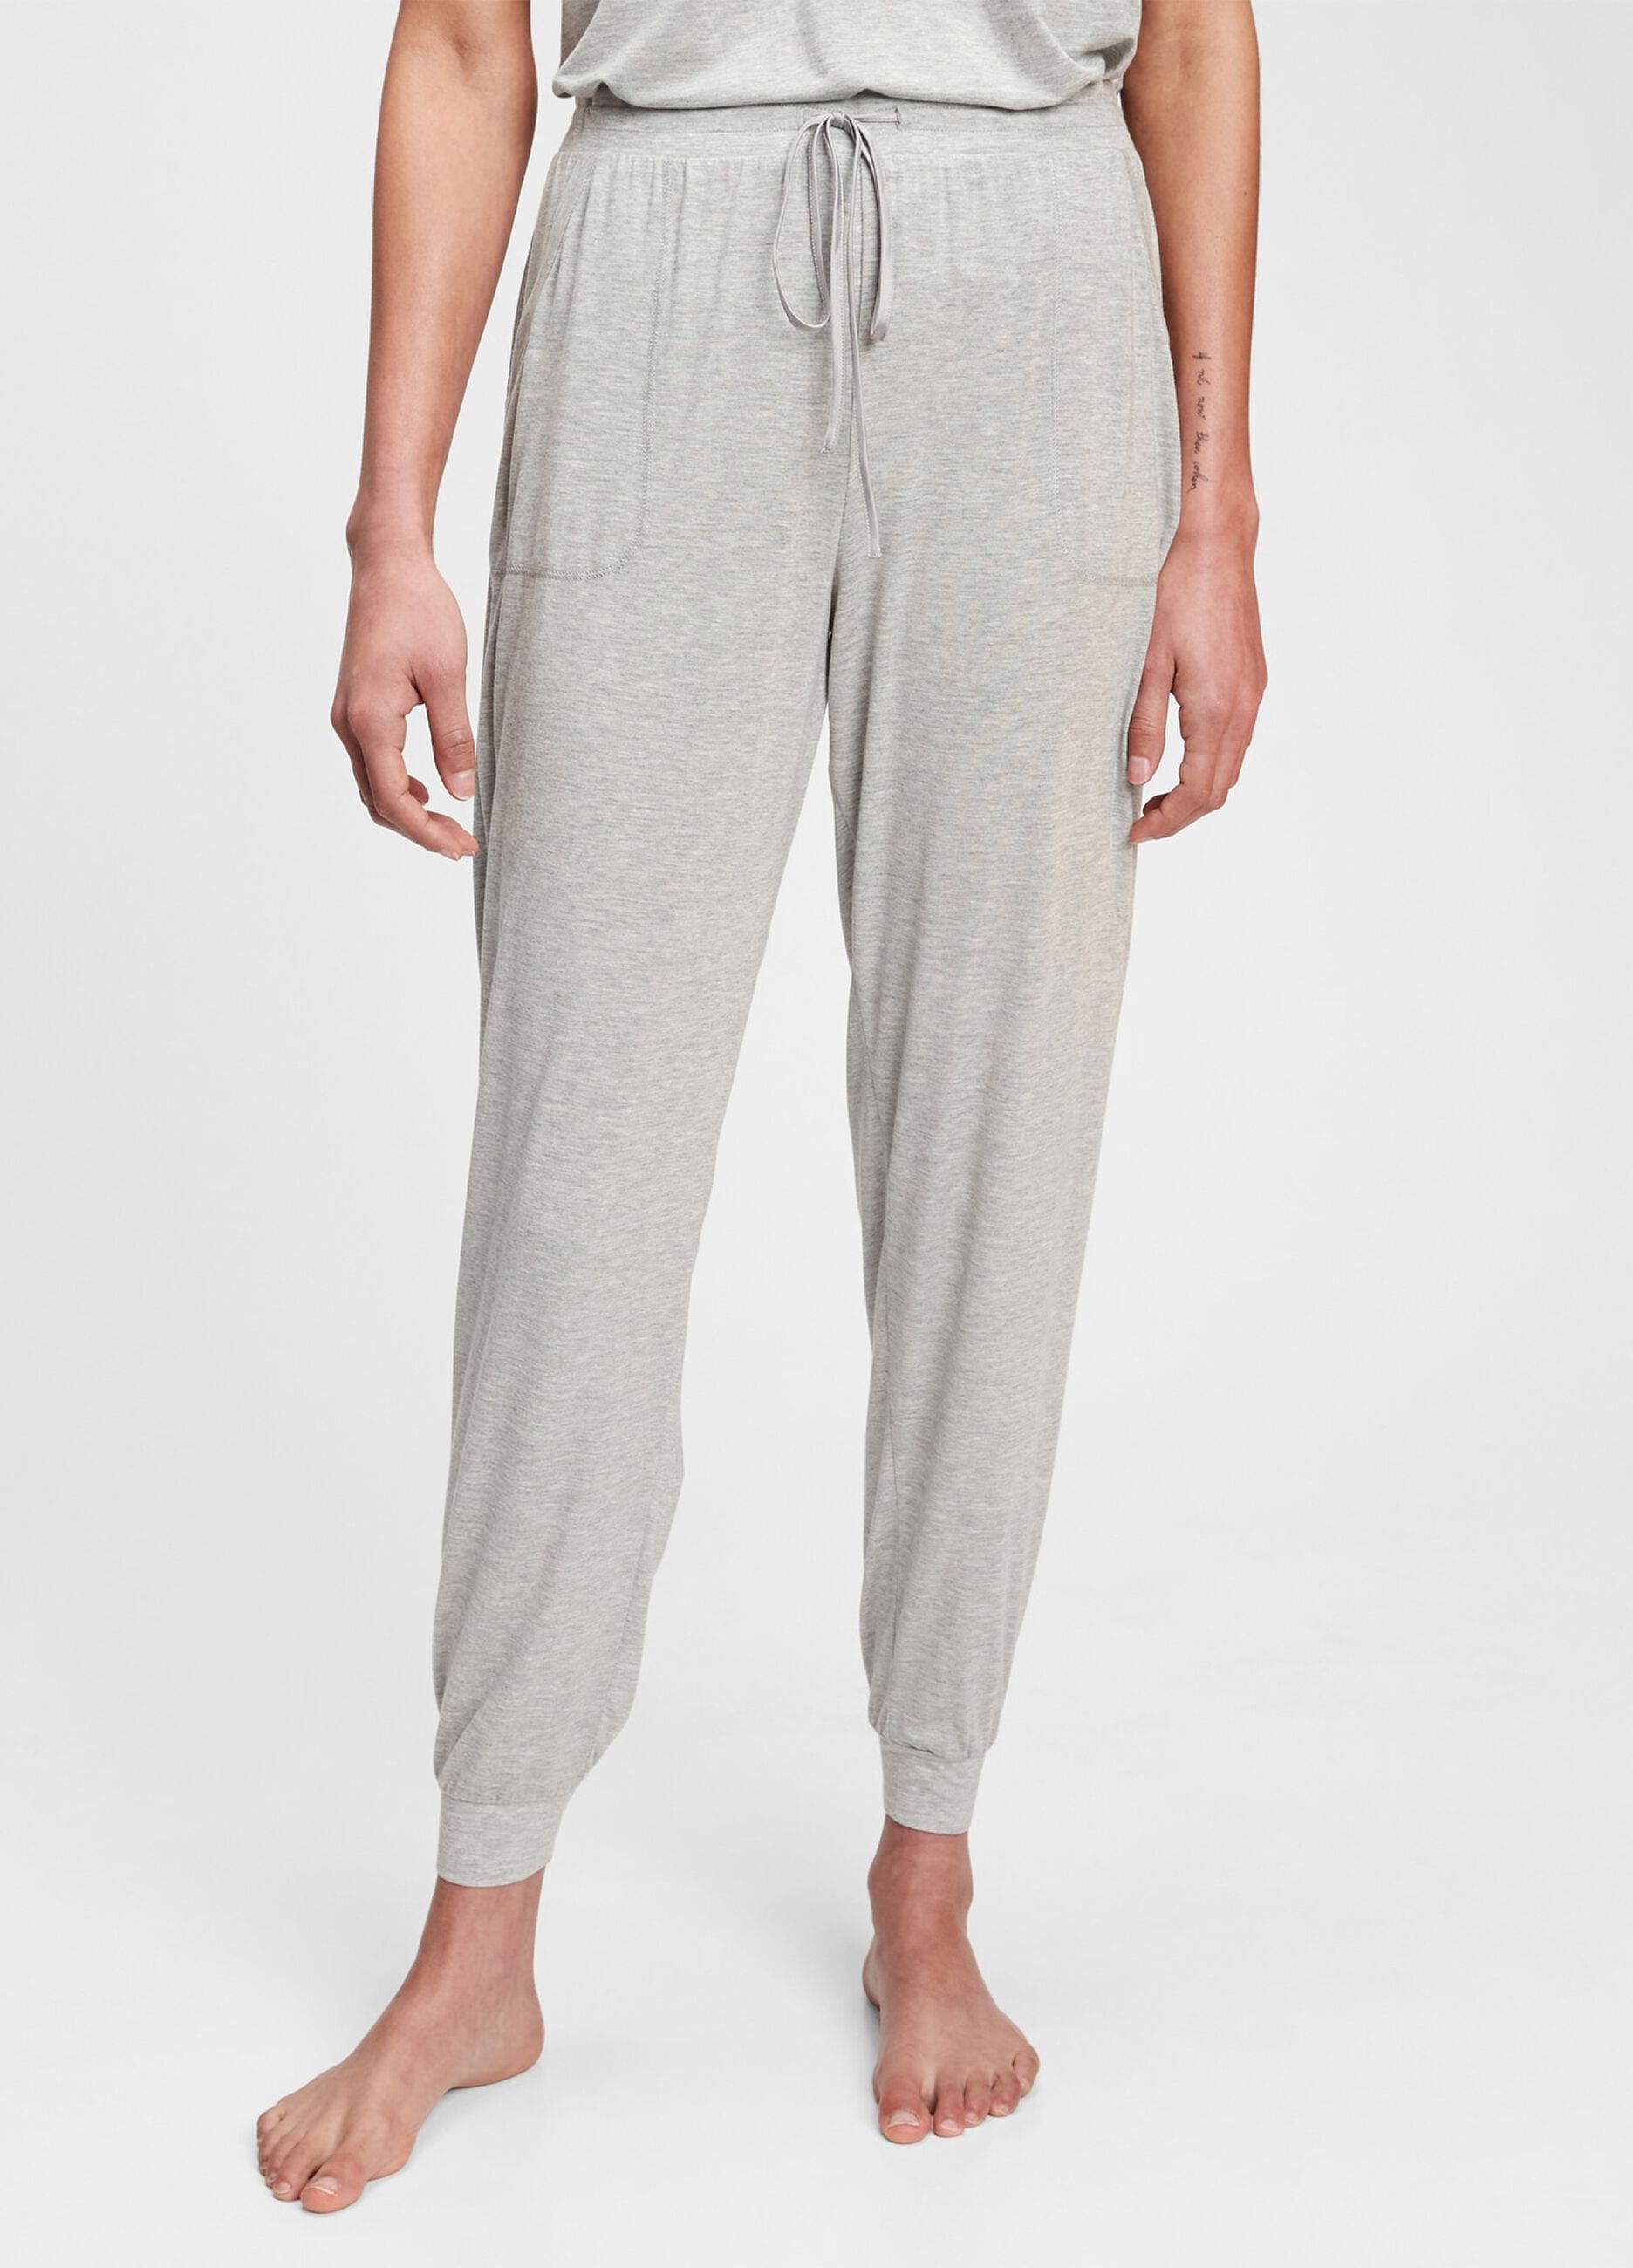 Pyjama trousers with drawstring